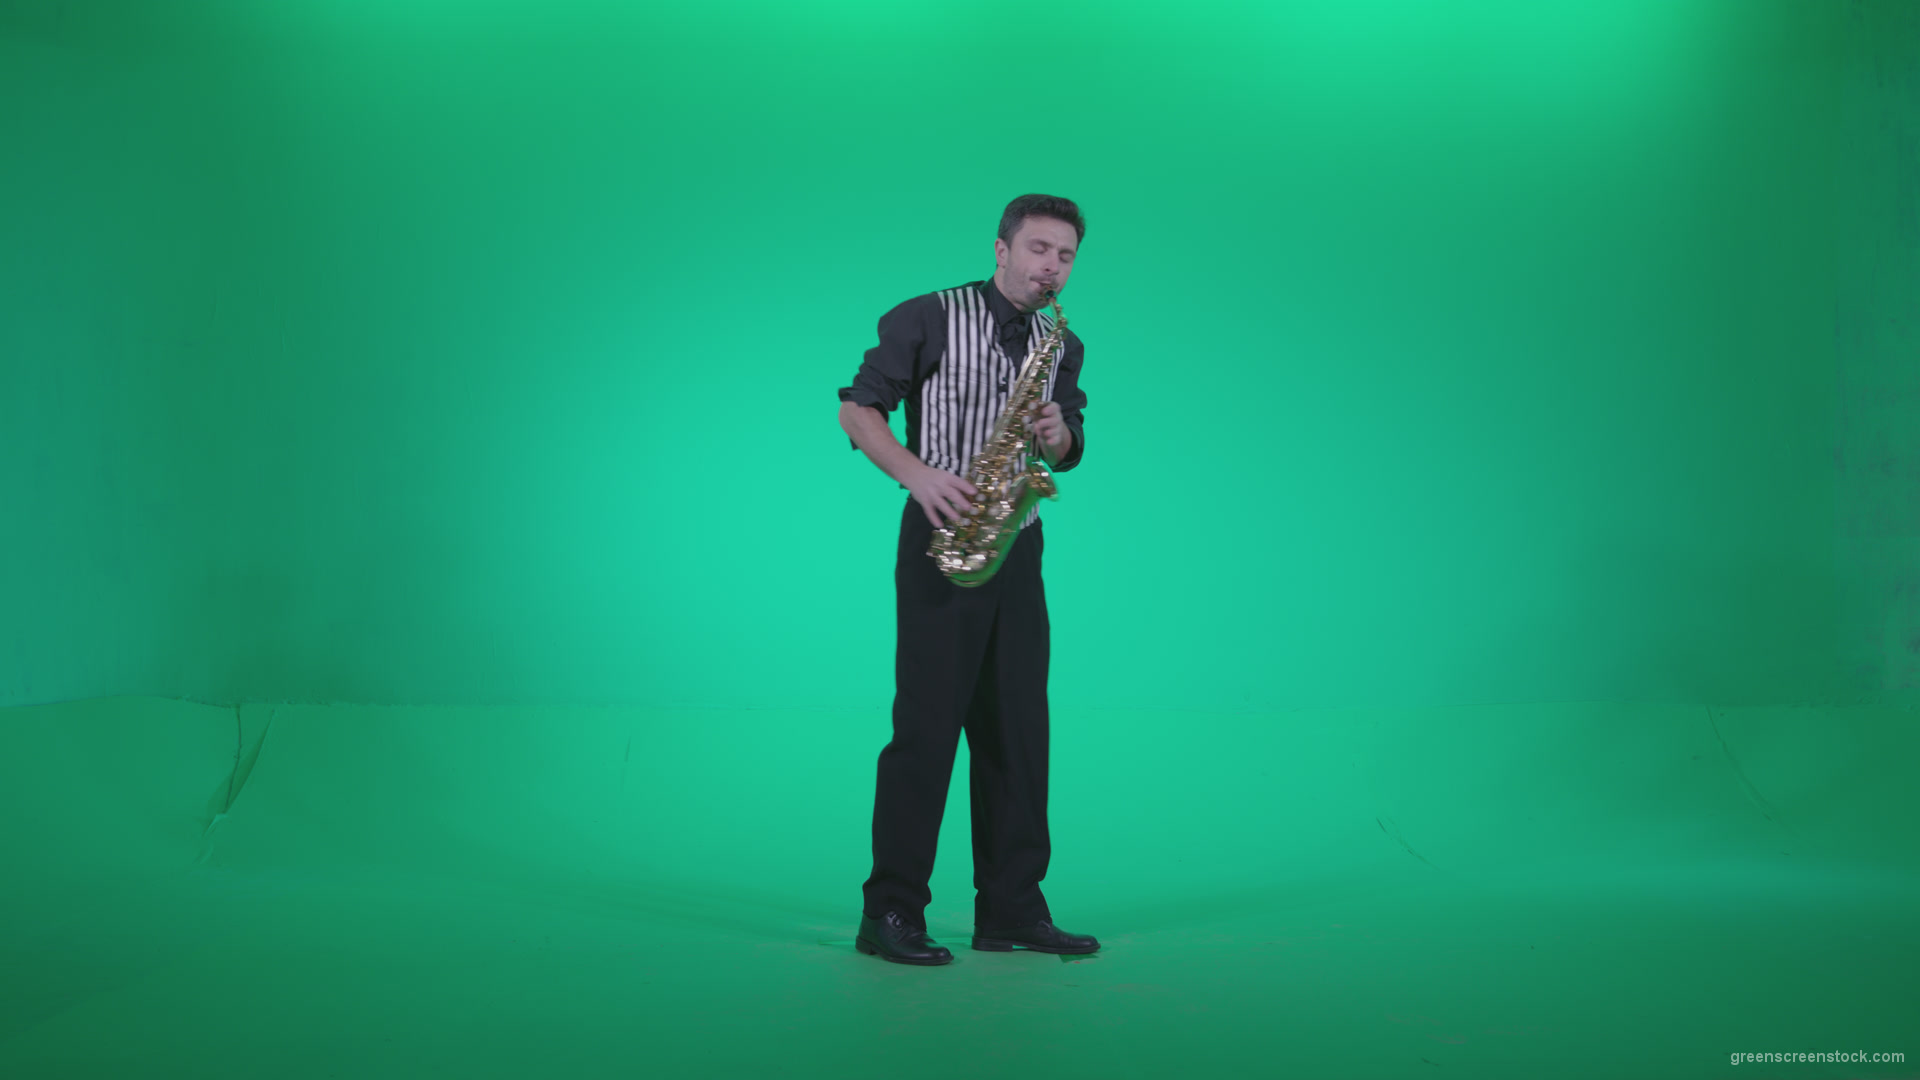 Saxophone-Virtuoso-Performer-s3_004 Green Screen Stock